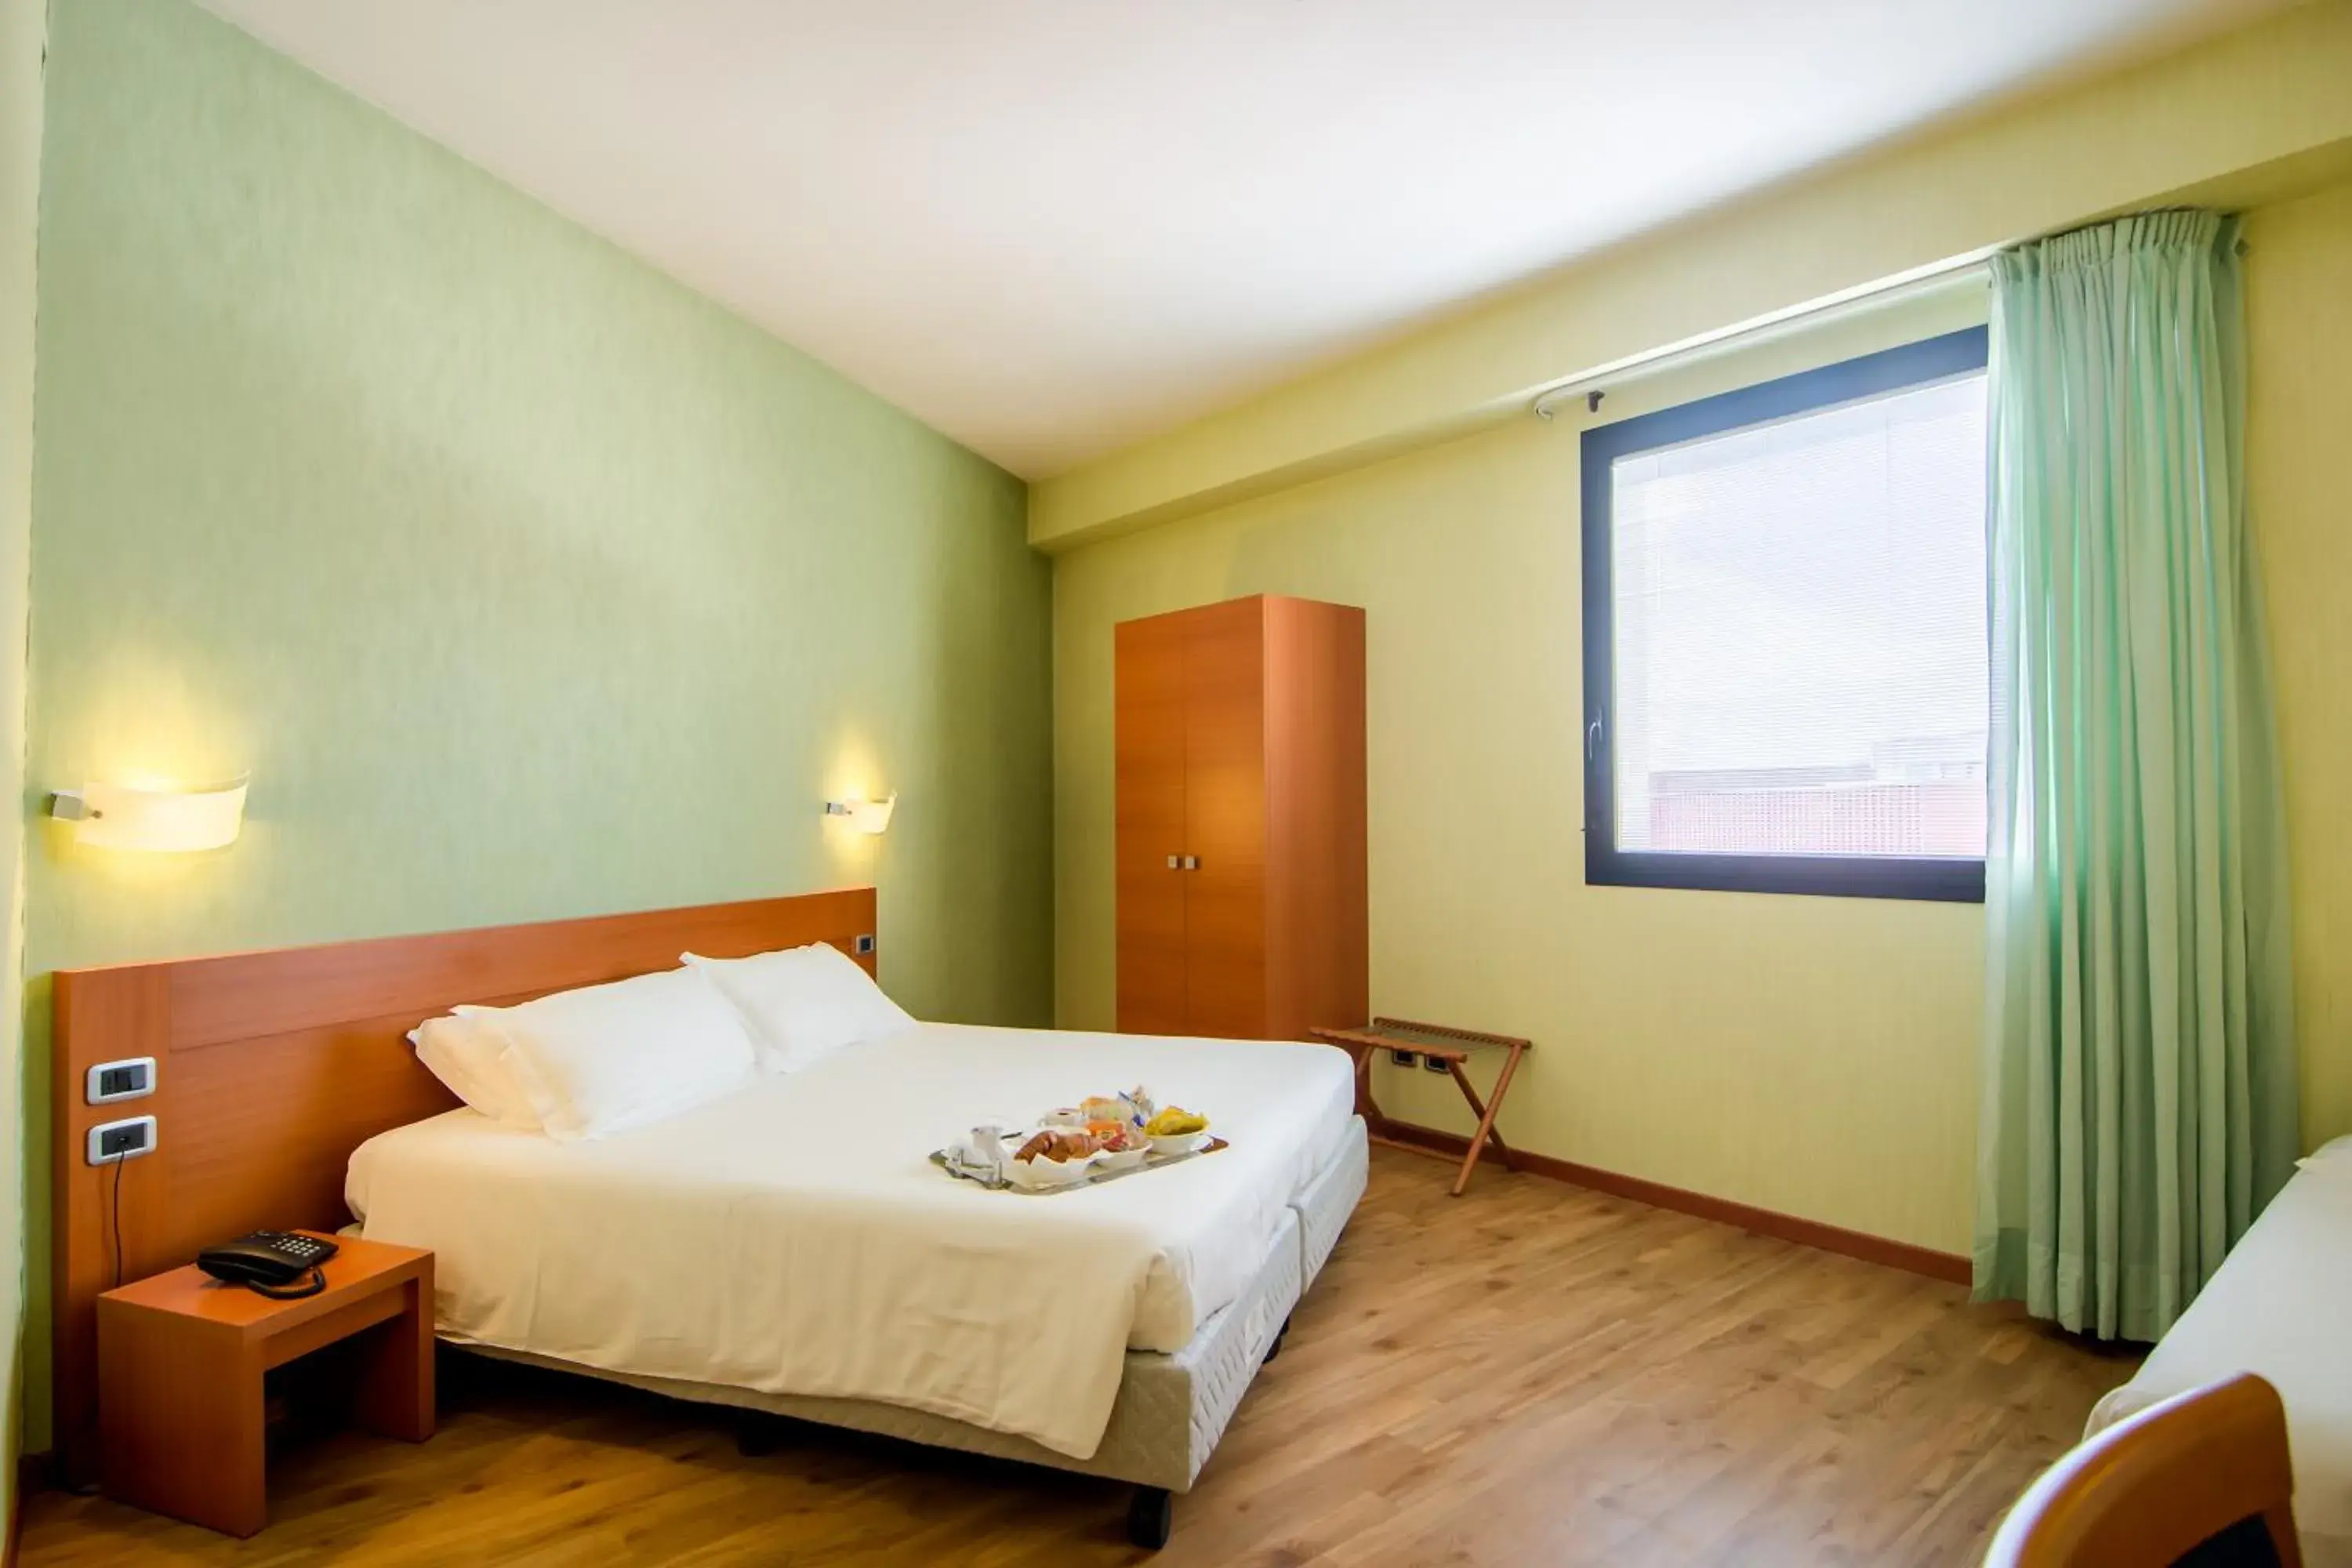 Bedroom, Room Photo in Hotel Concorde